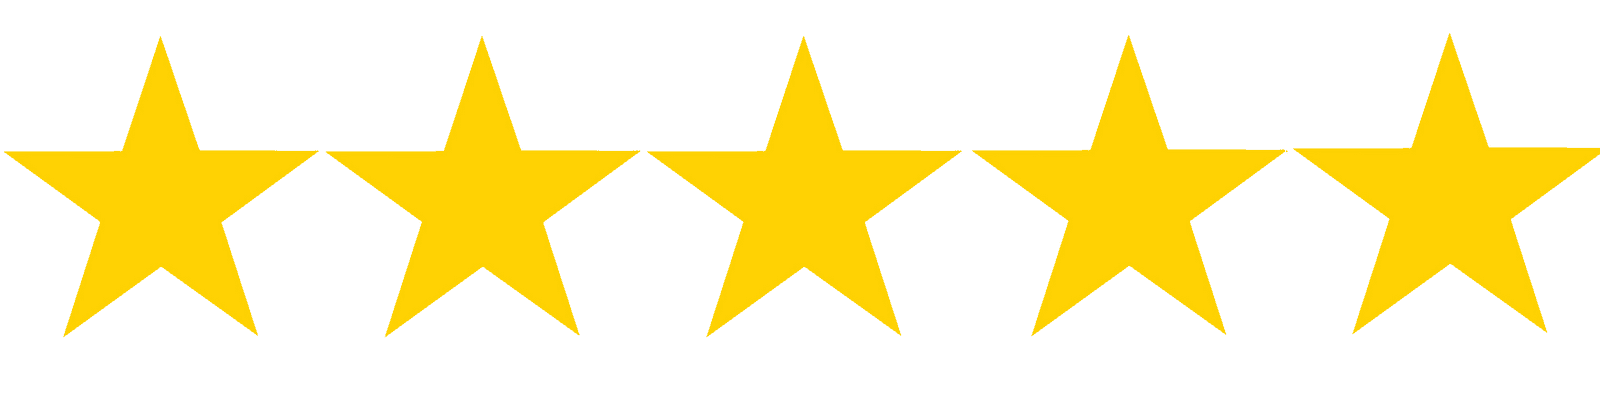 Image result for five stars